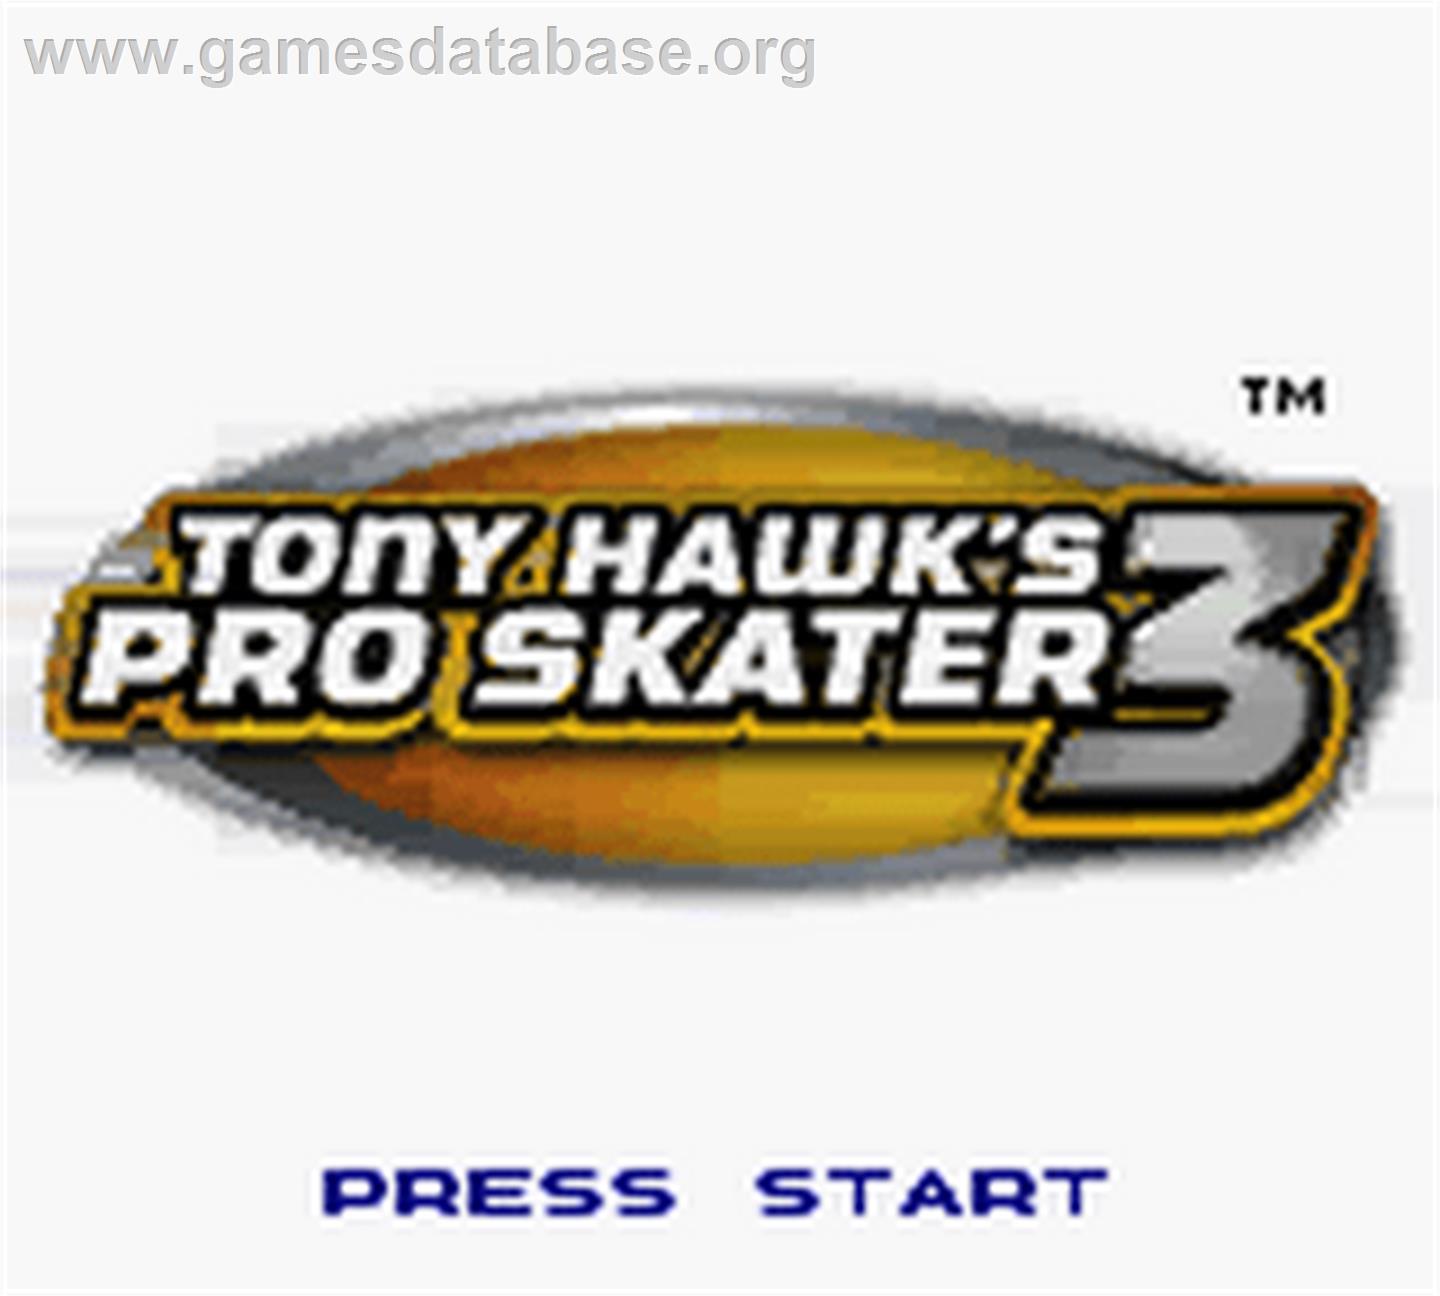 Tony Hawk's Pro Skater 3 - Nintendo Game Boy Color - Artwork - Title Screen